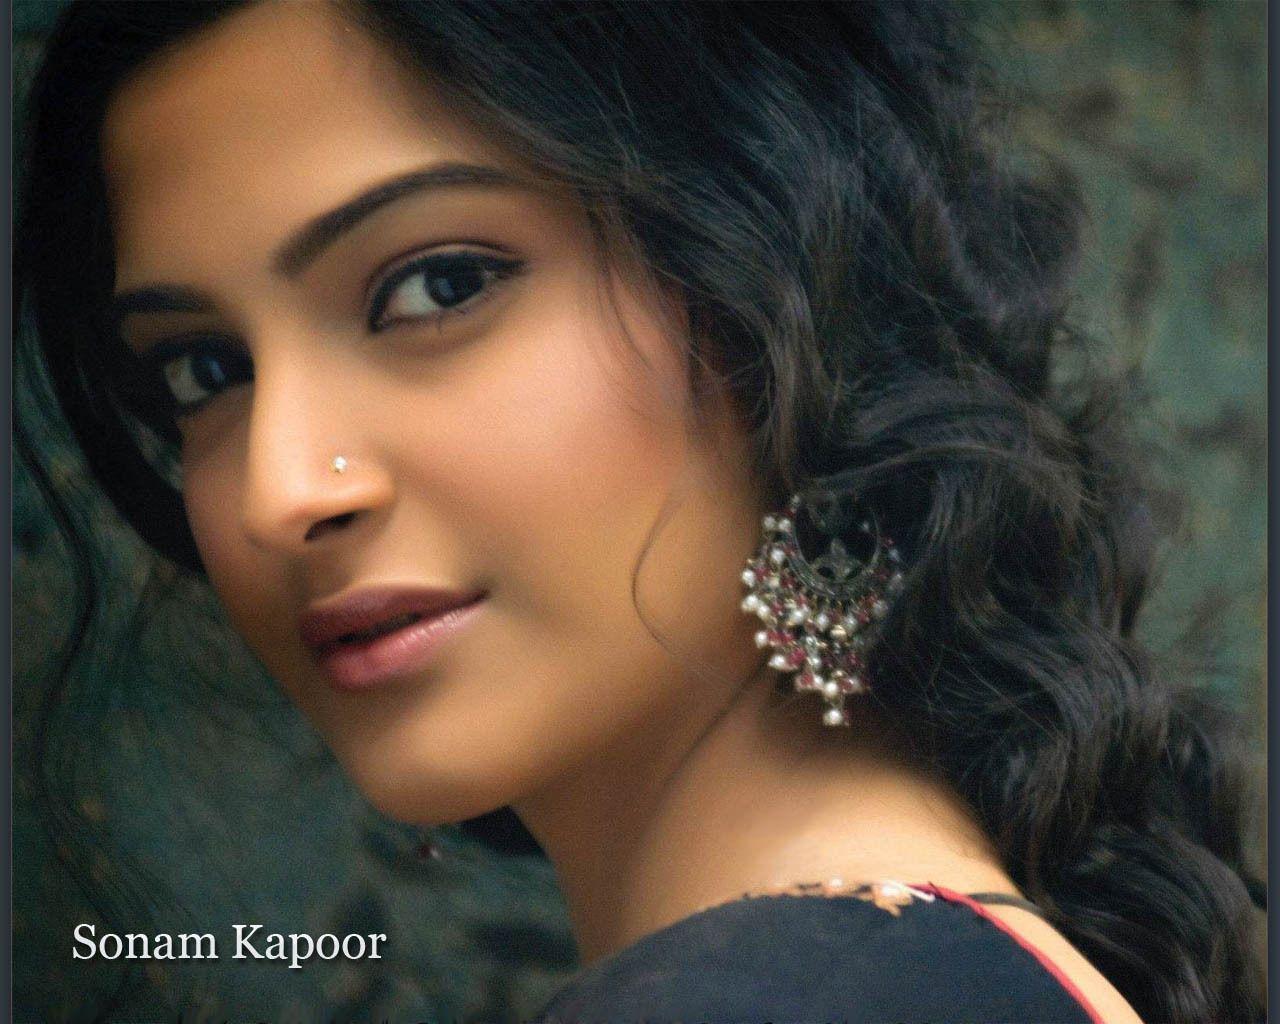 Sonam Kapoor image sonam HD wallpaper and background photo